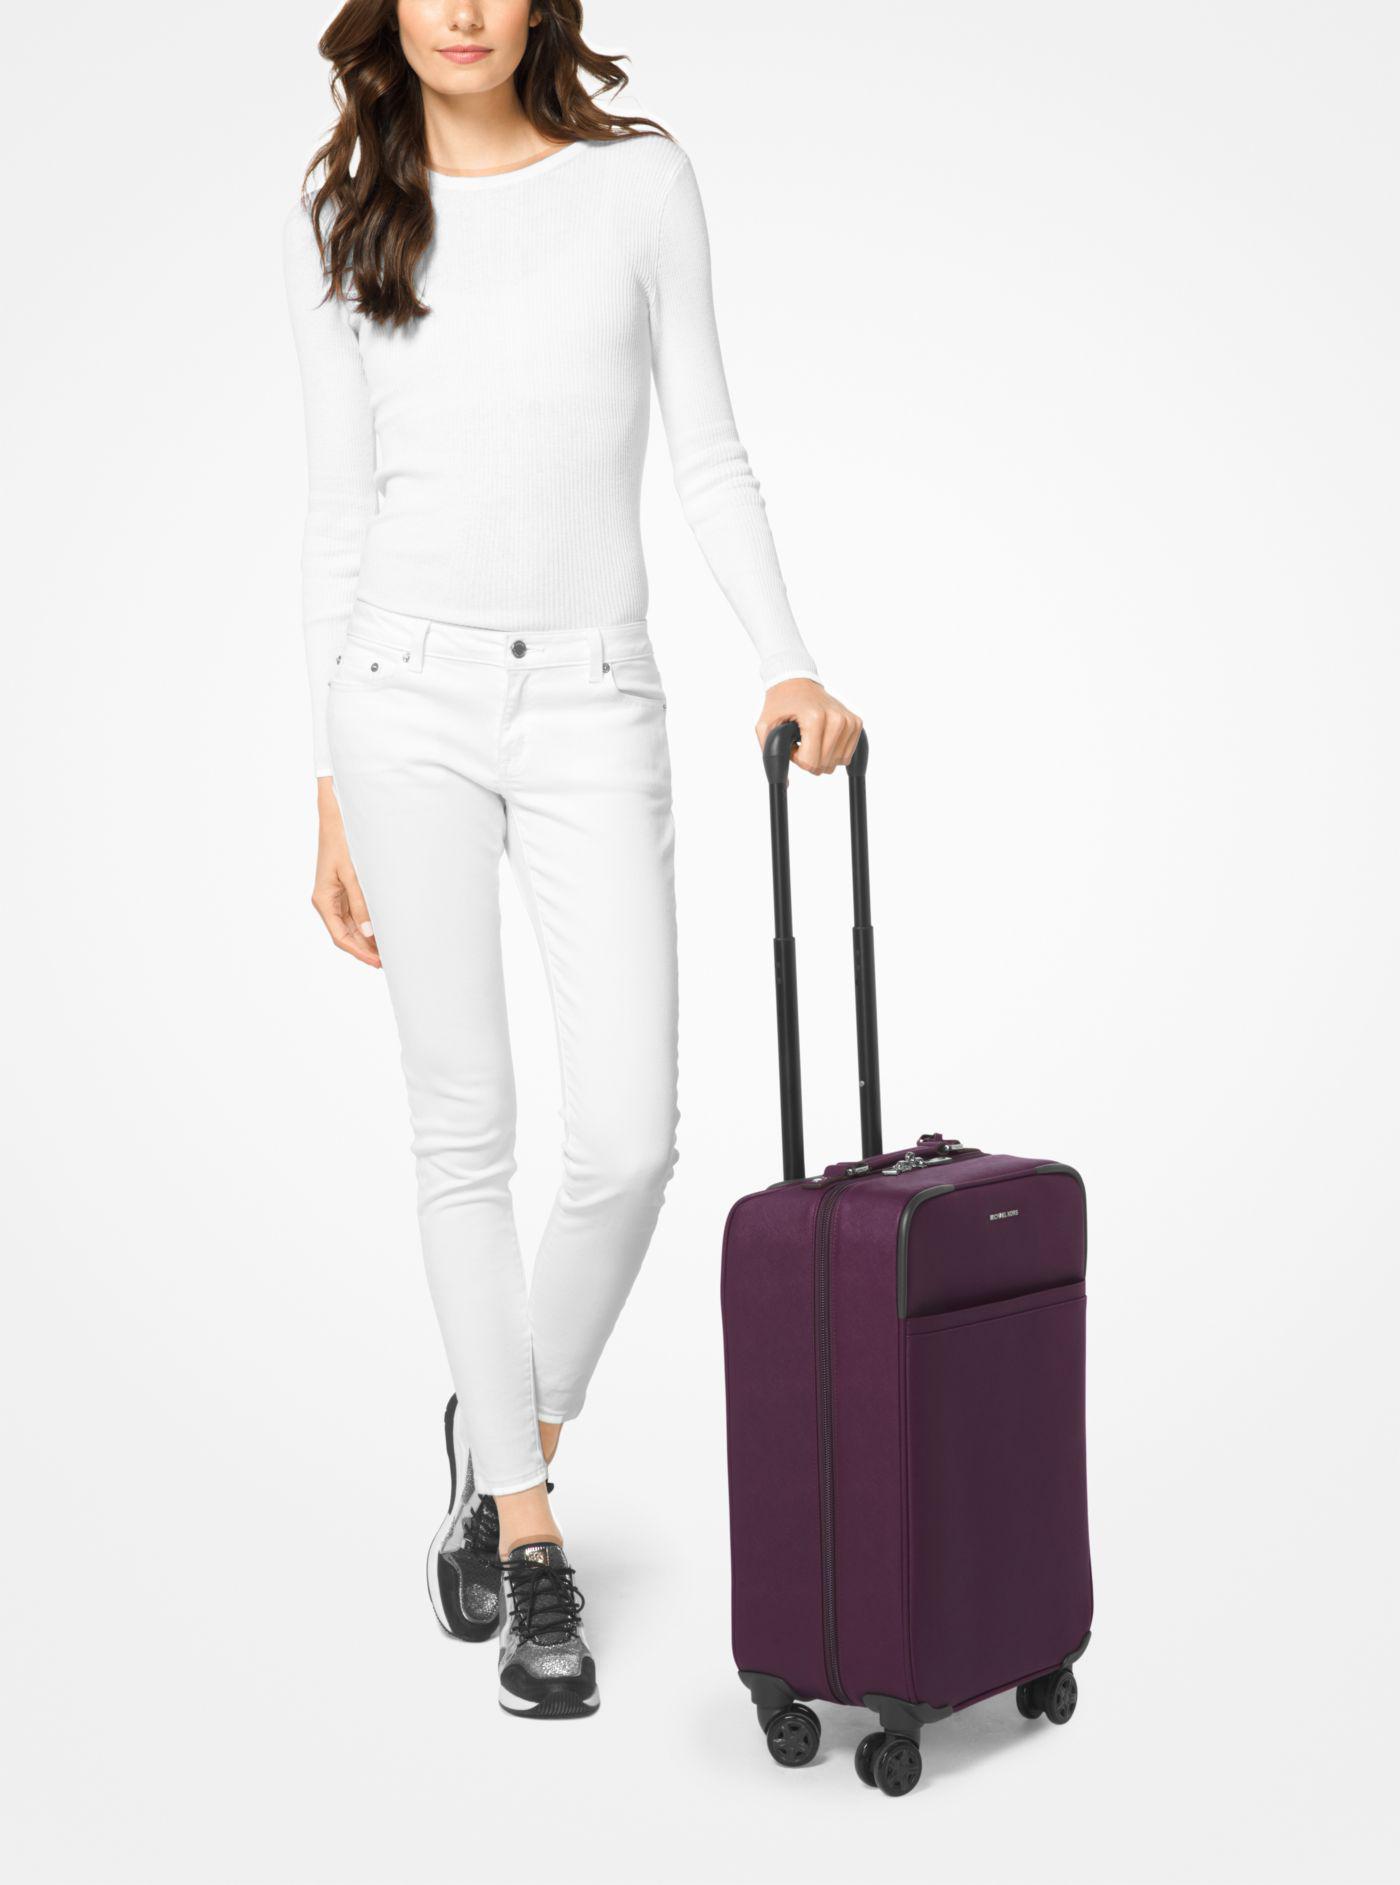 Michael Kors Jet Set Travel Large Saffiano Leather Suitcase in Purple | Lyst